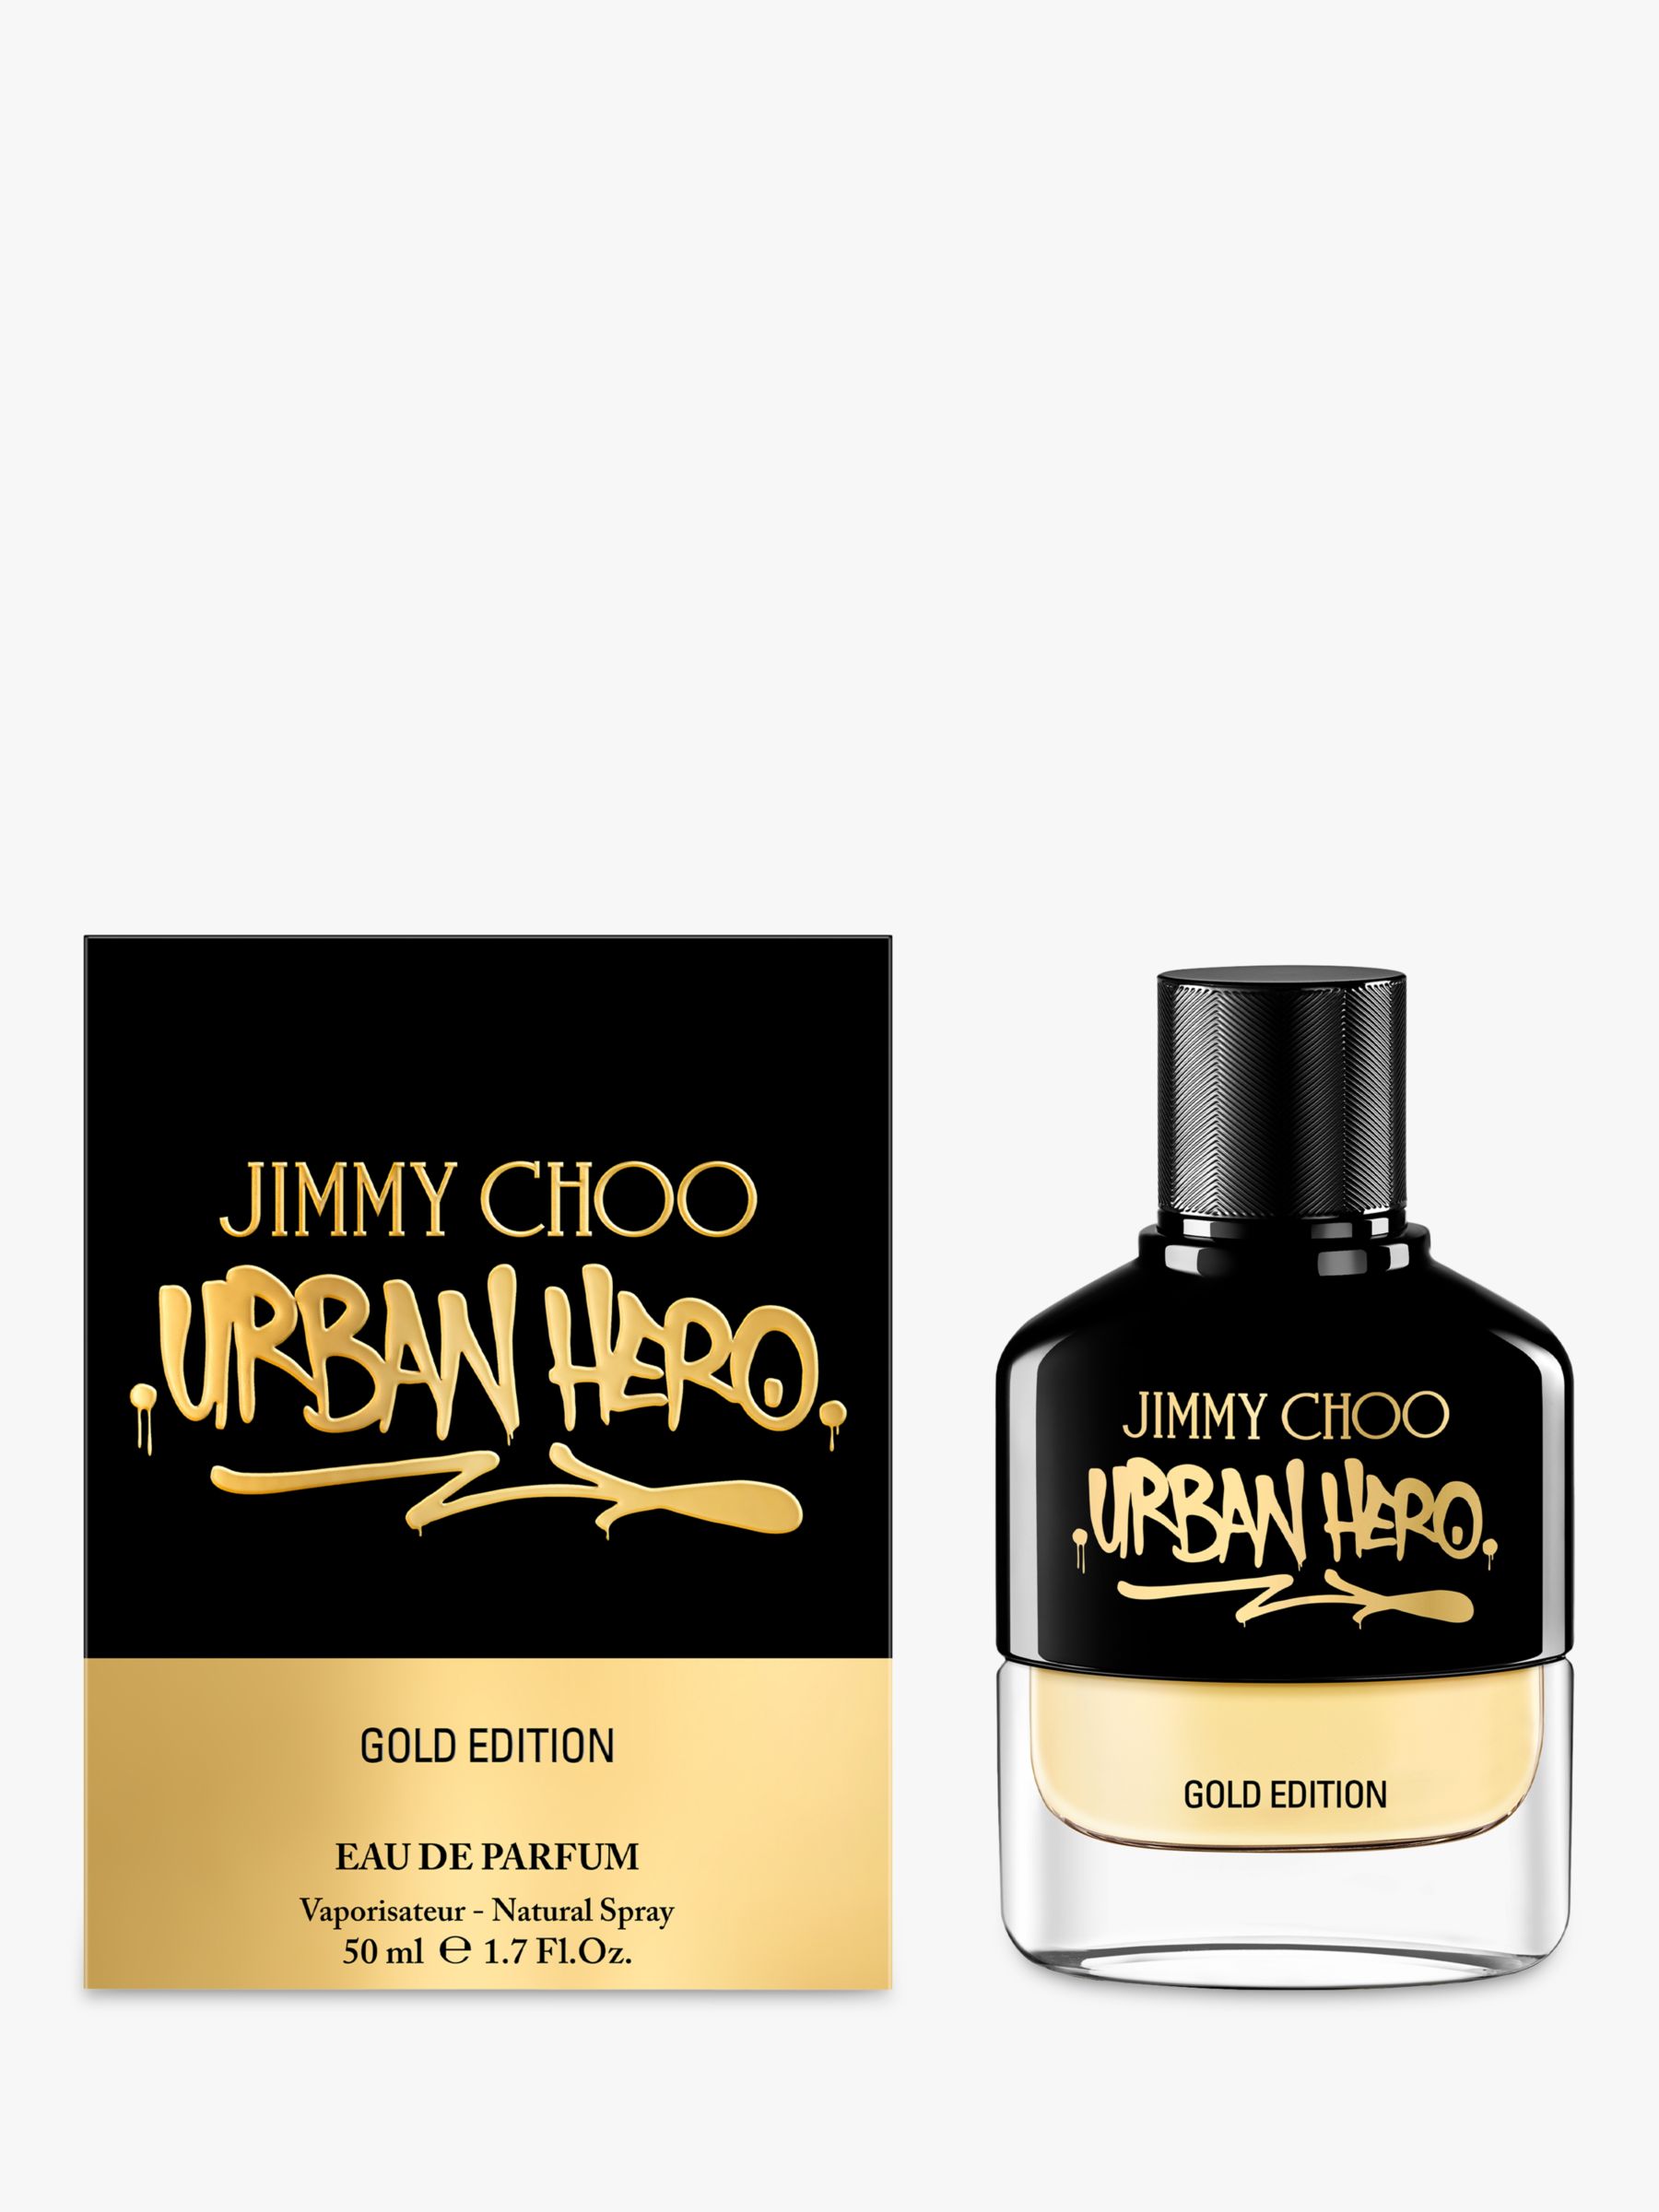 Jimmy Choo Urban Hero Gold Edition Eau de Parfum, 50ml